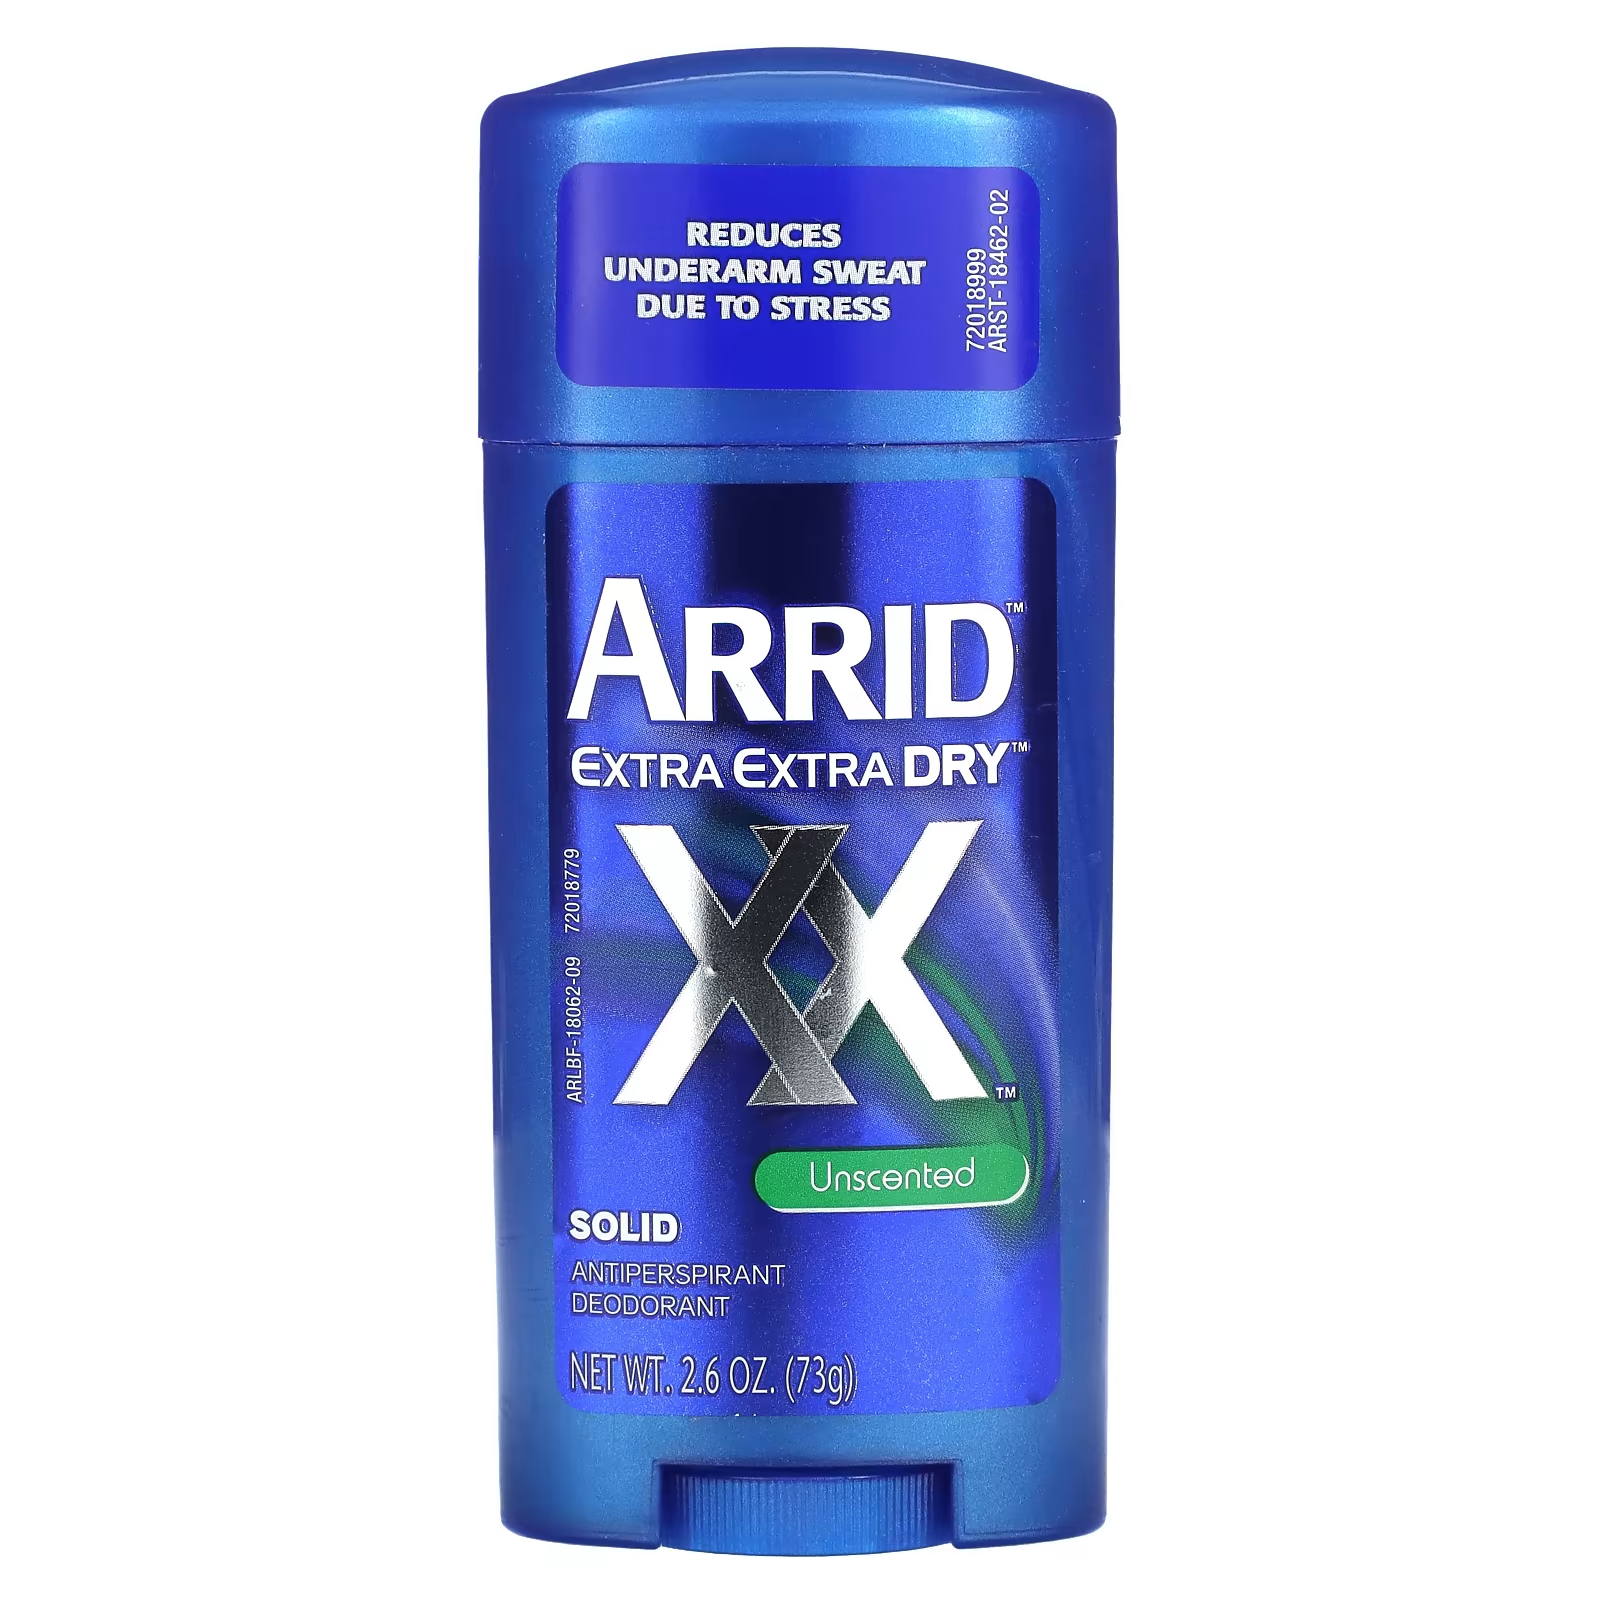 Дезодорант-антиперспирант Arrid Extra Extra Dry XX твердый arrid extra extra dry xx твердый дезодорант антиперспирант прохладный душ 73 г 2 6 унции